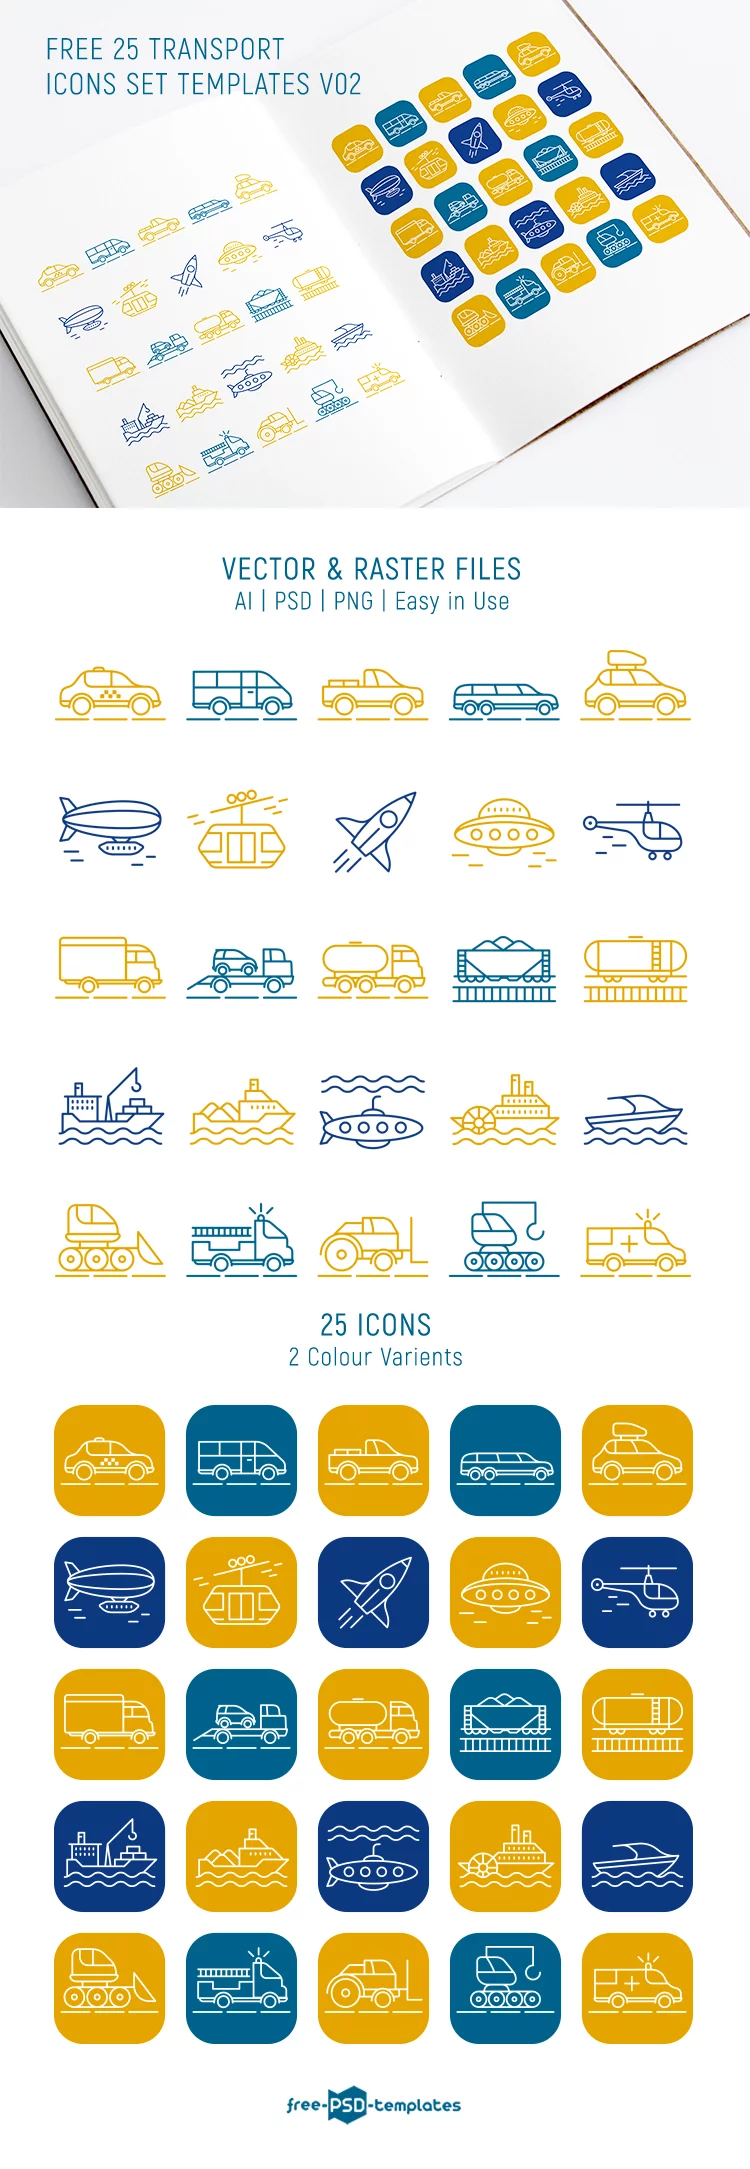 Free 25 Transport Icons Set Templates V02